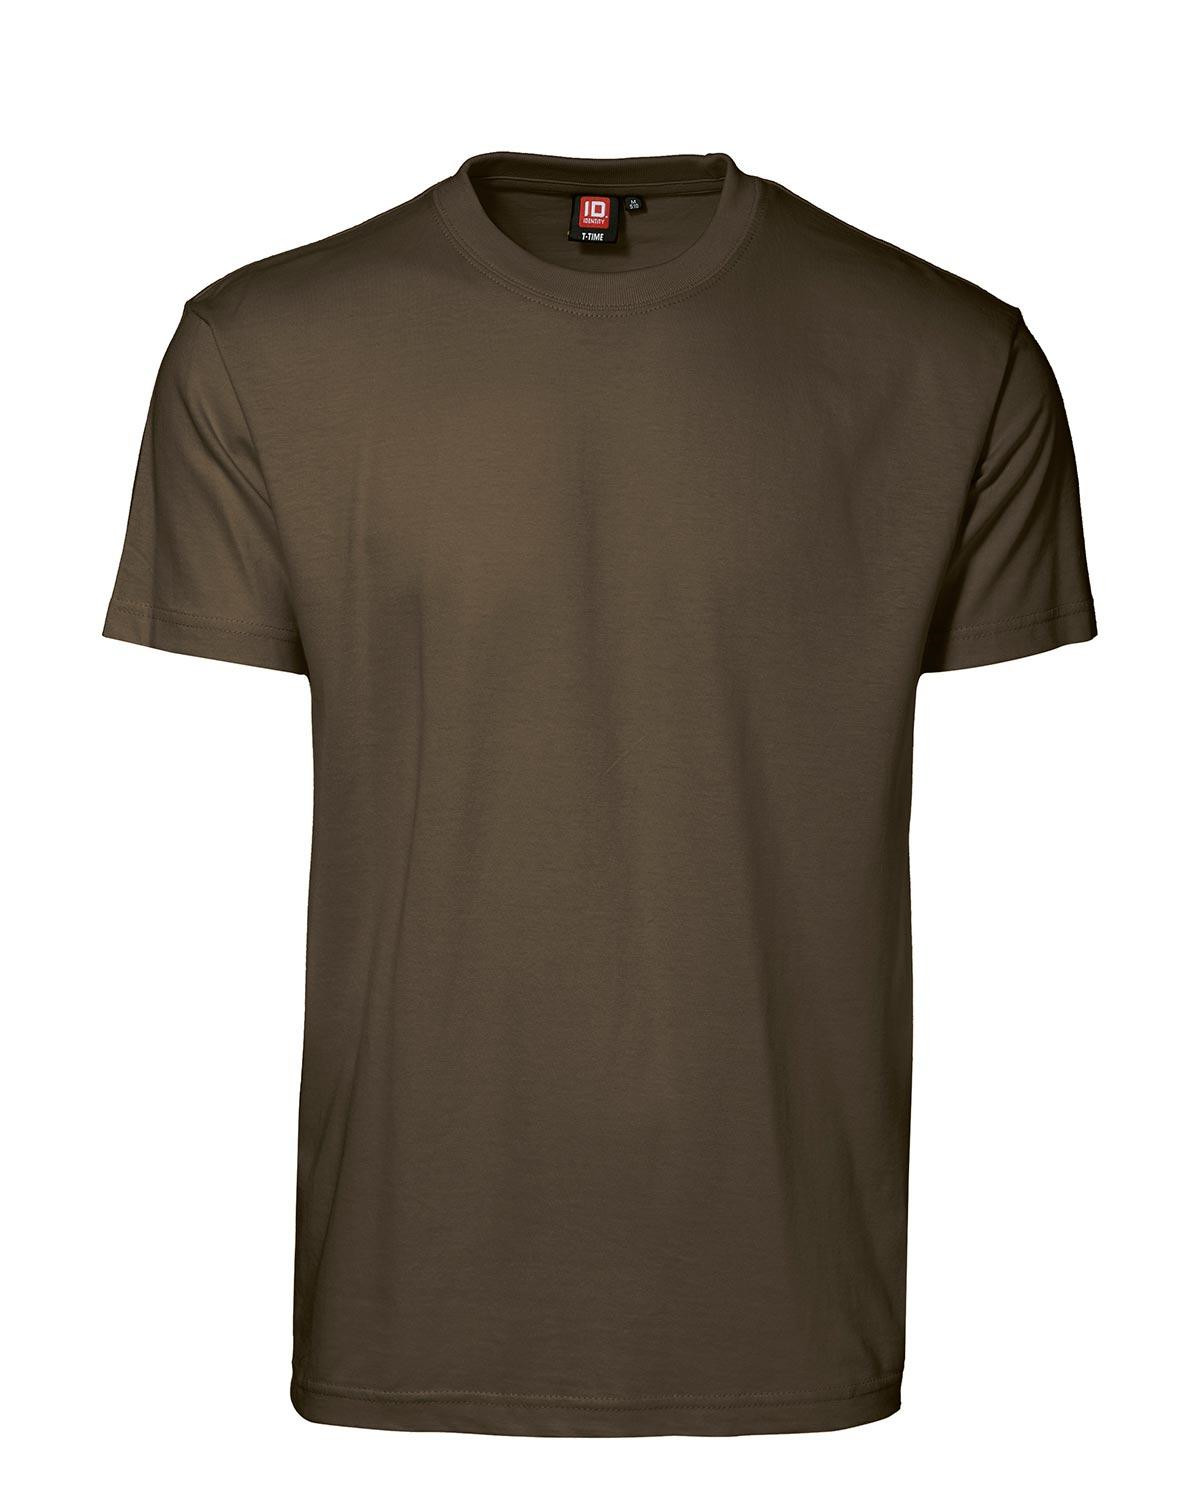 ID T-Time T-shirt, rund hals (Oliven, S)